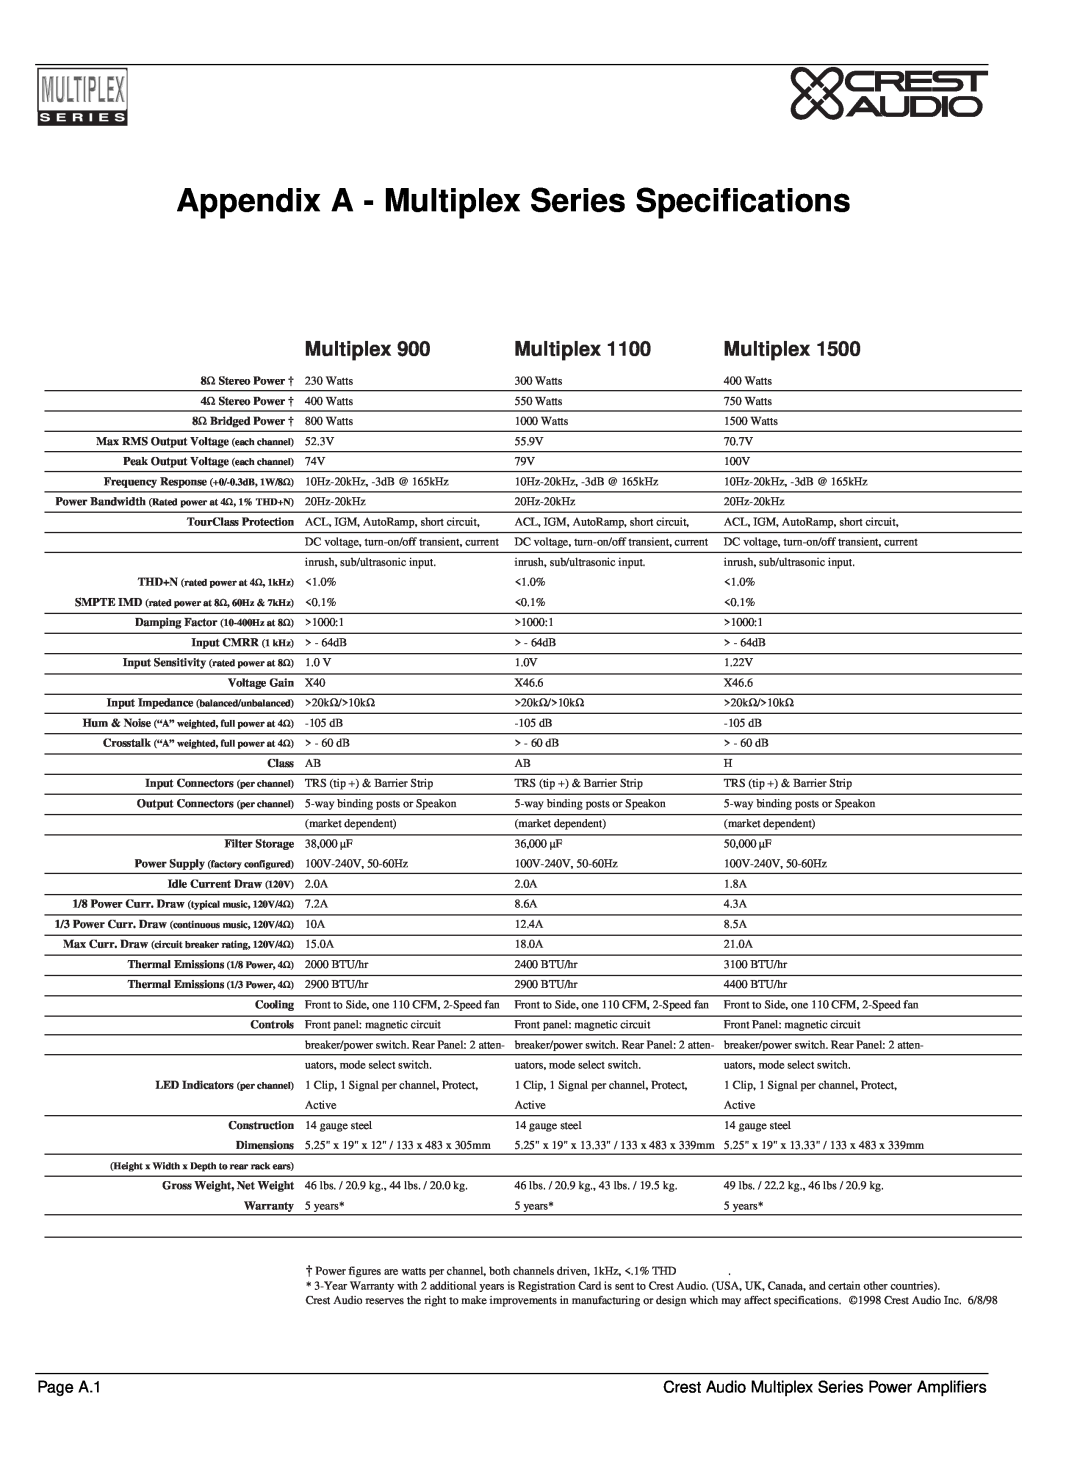 Peavey Appendix A - Multiplex Series Specifications, Page A.1, Crest Audio Multiplex Series Power Amplifiers 